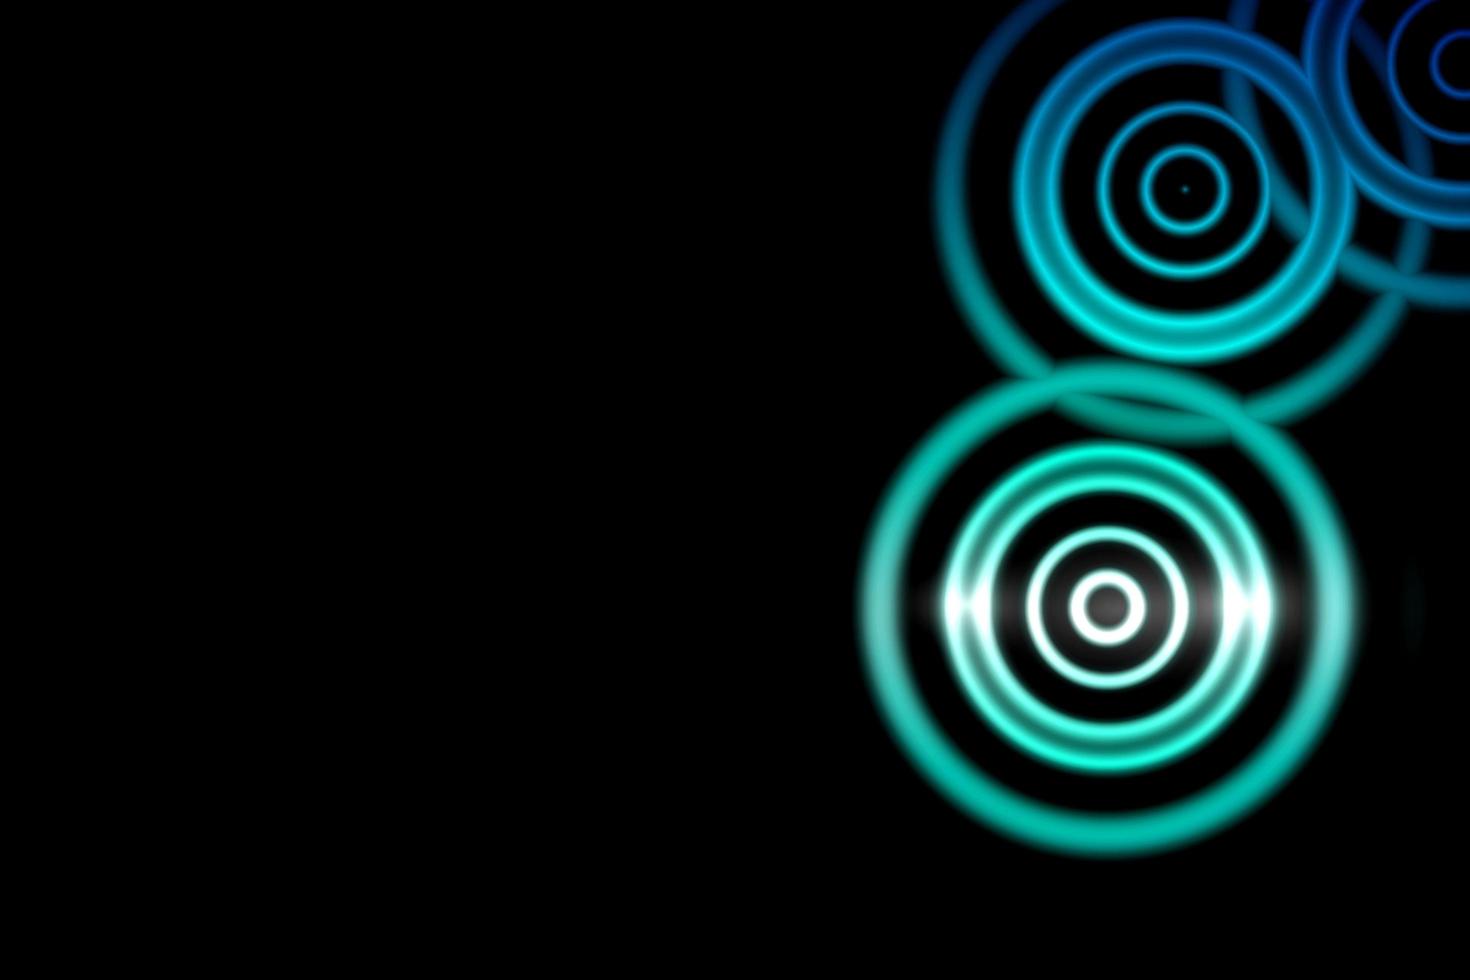 lichte groenblauw geluidsgolven oscilleren met cirkelring op zwarte achtergrond foto